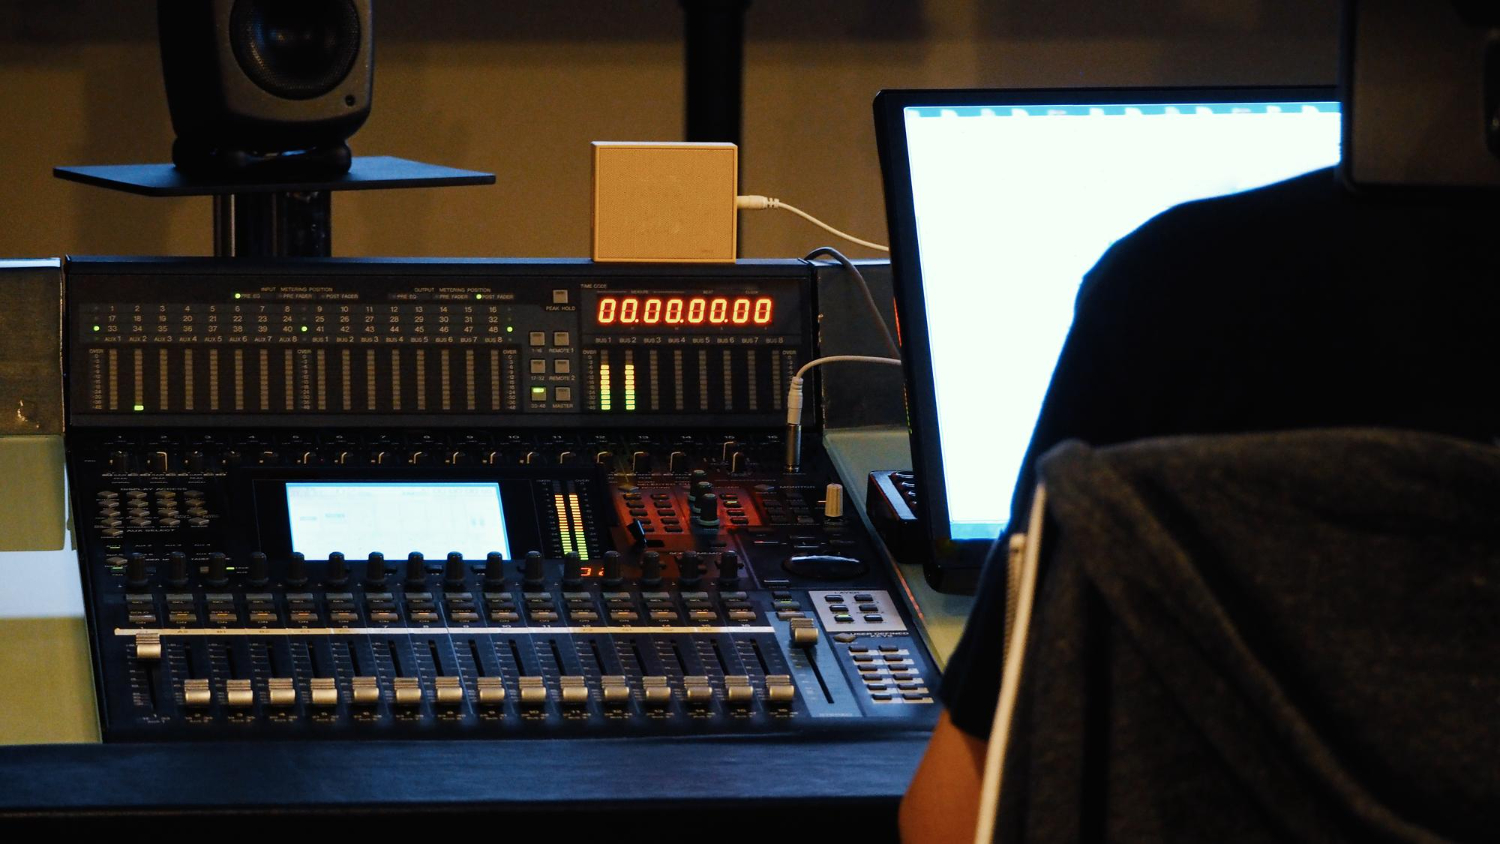 analog audio sound mixer controller panel machine work with digital recording final mix